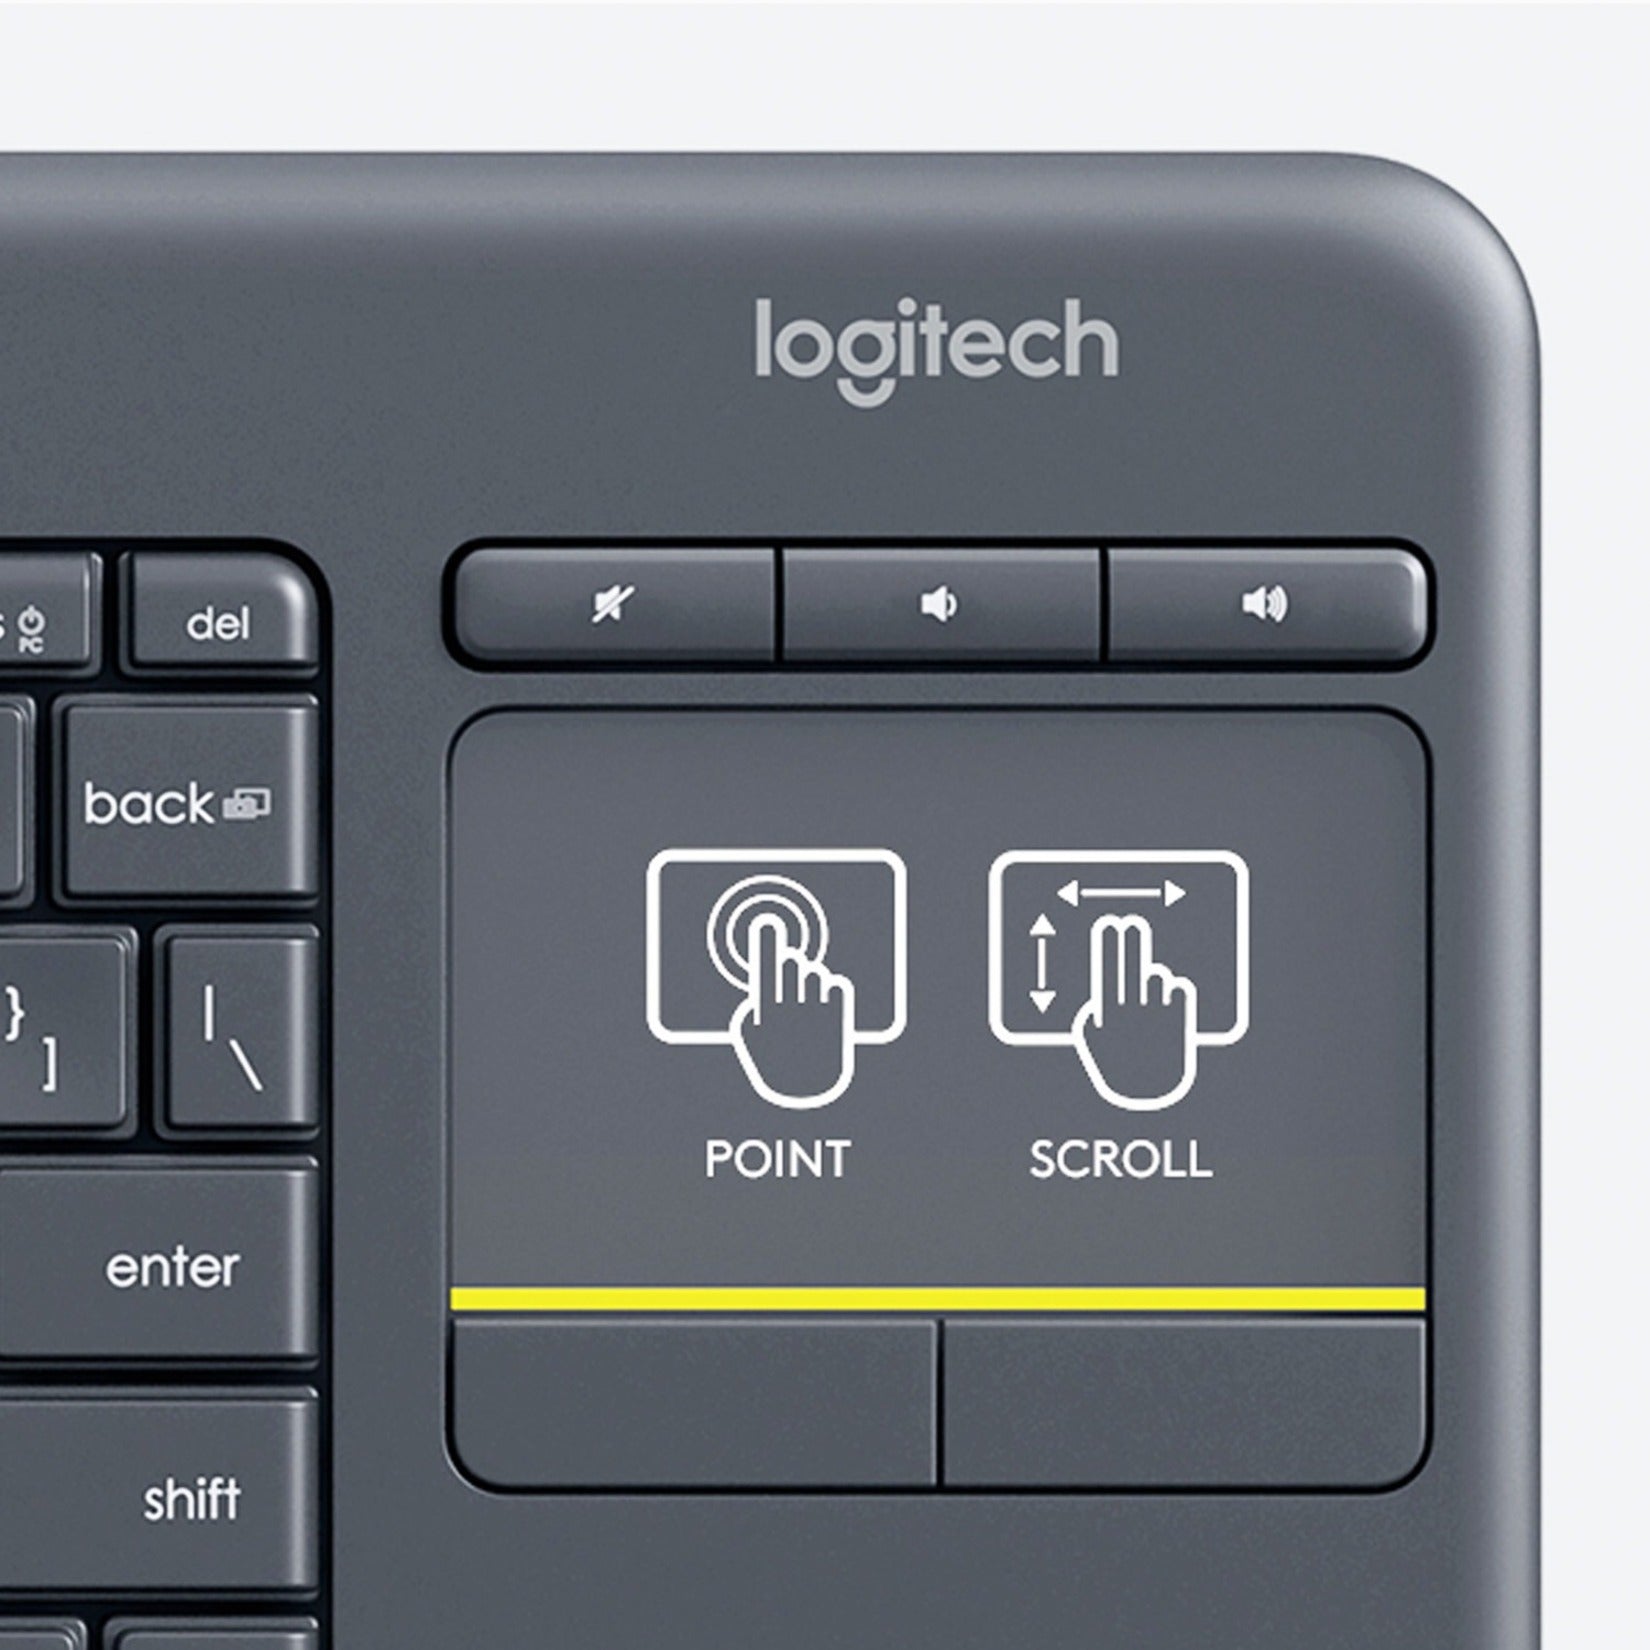 Logitech 920-007119 K400 Plus Touchpad Wireless Keyboard, Black - Volume Control, QWERTY Layout